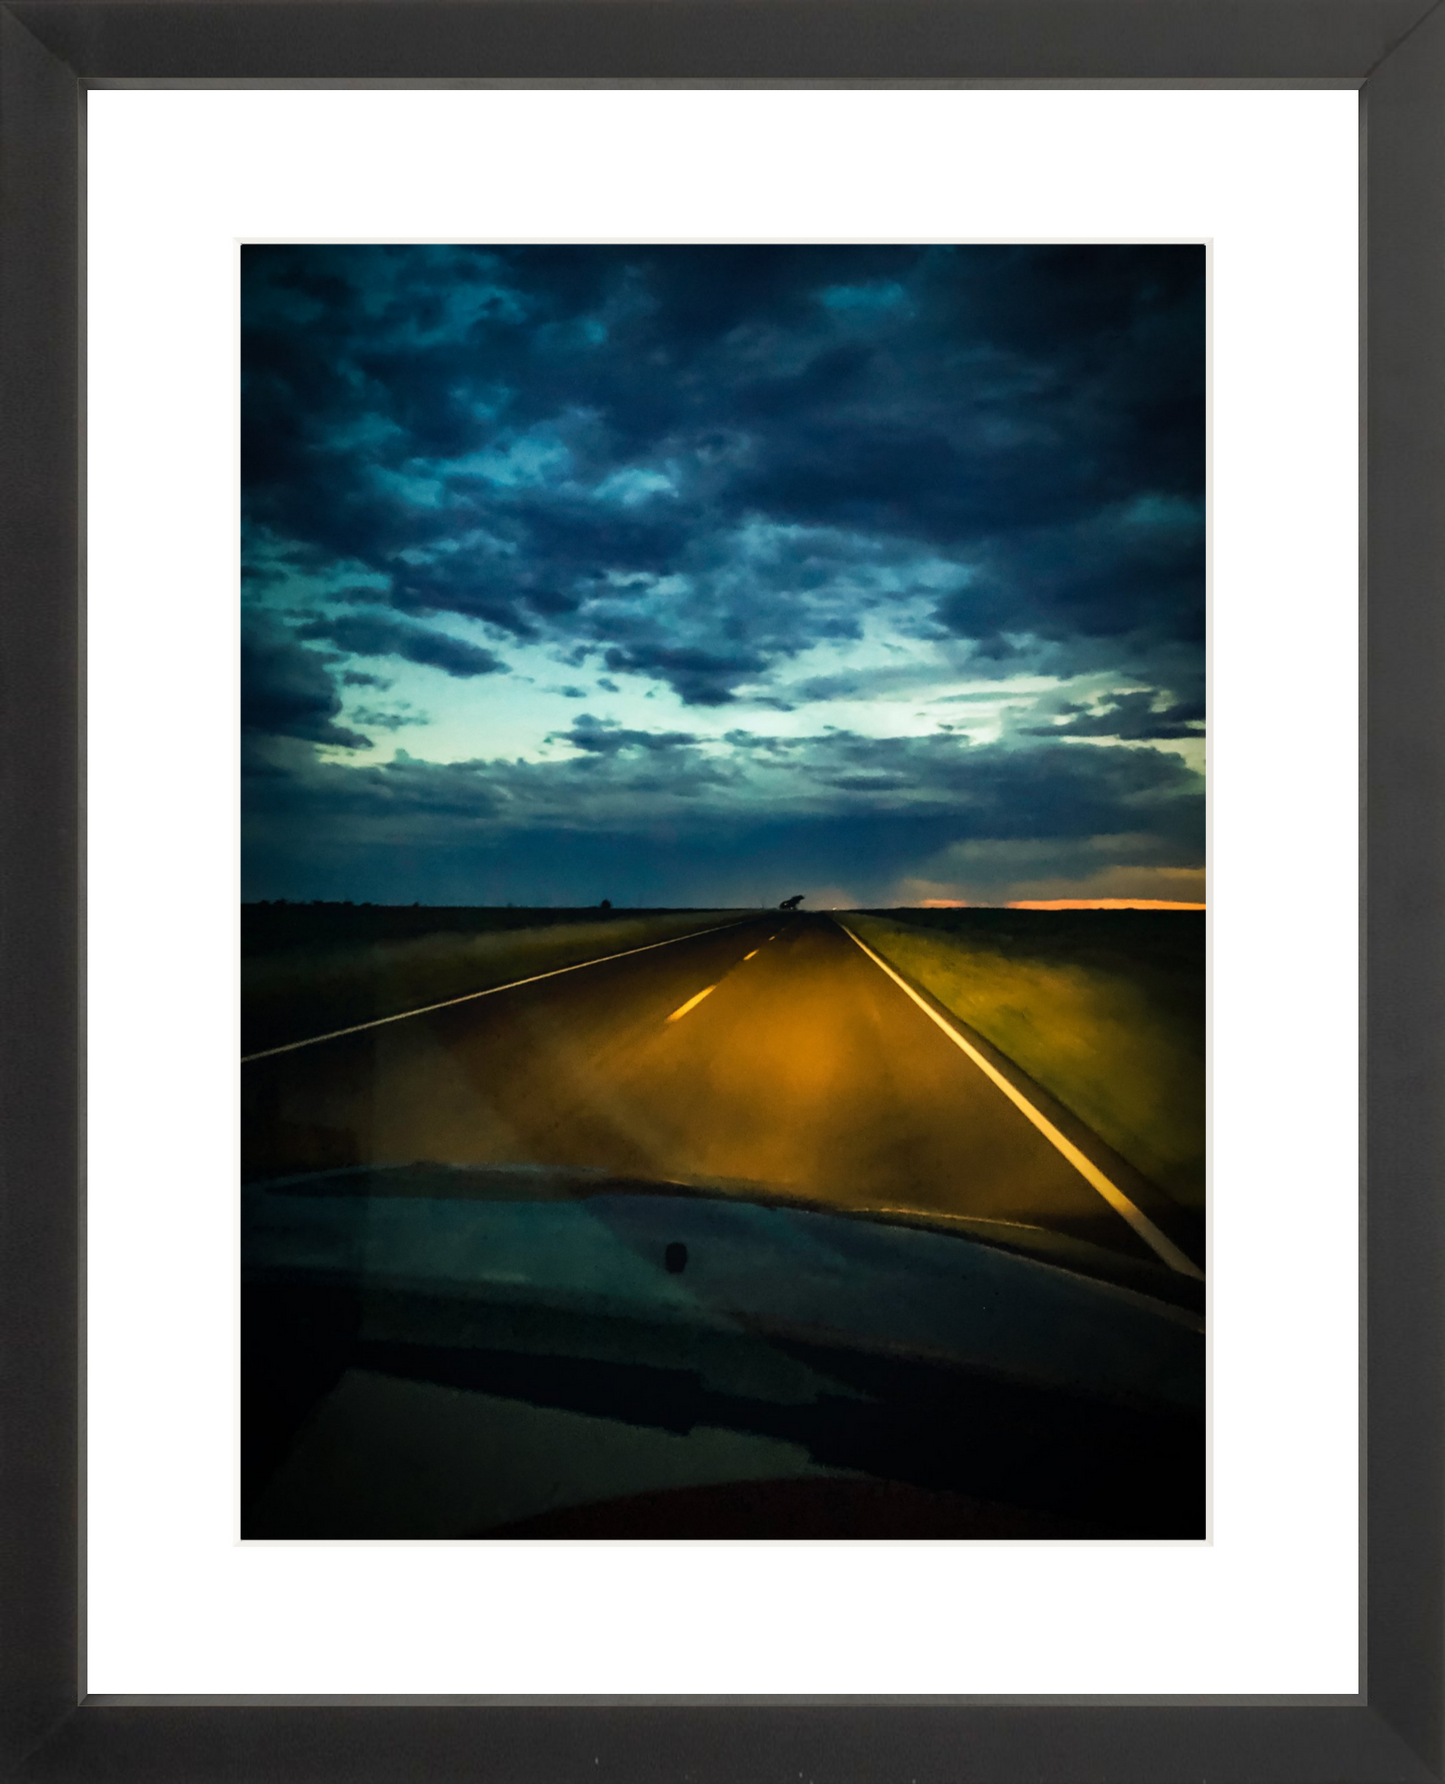 The Oklahoma Highway 10x13 Framed Print